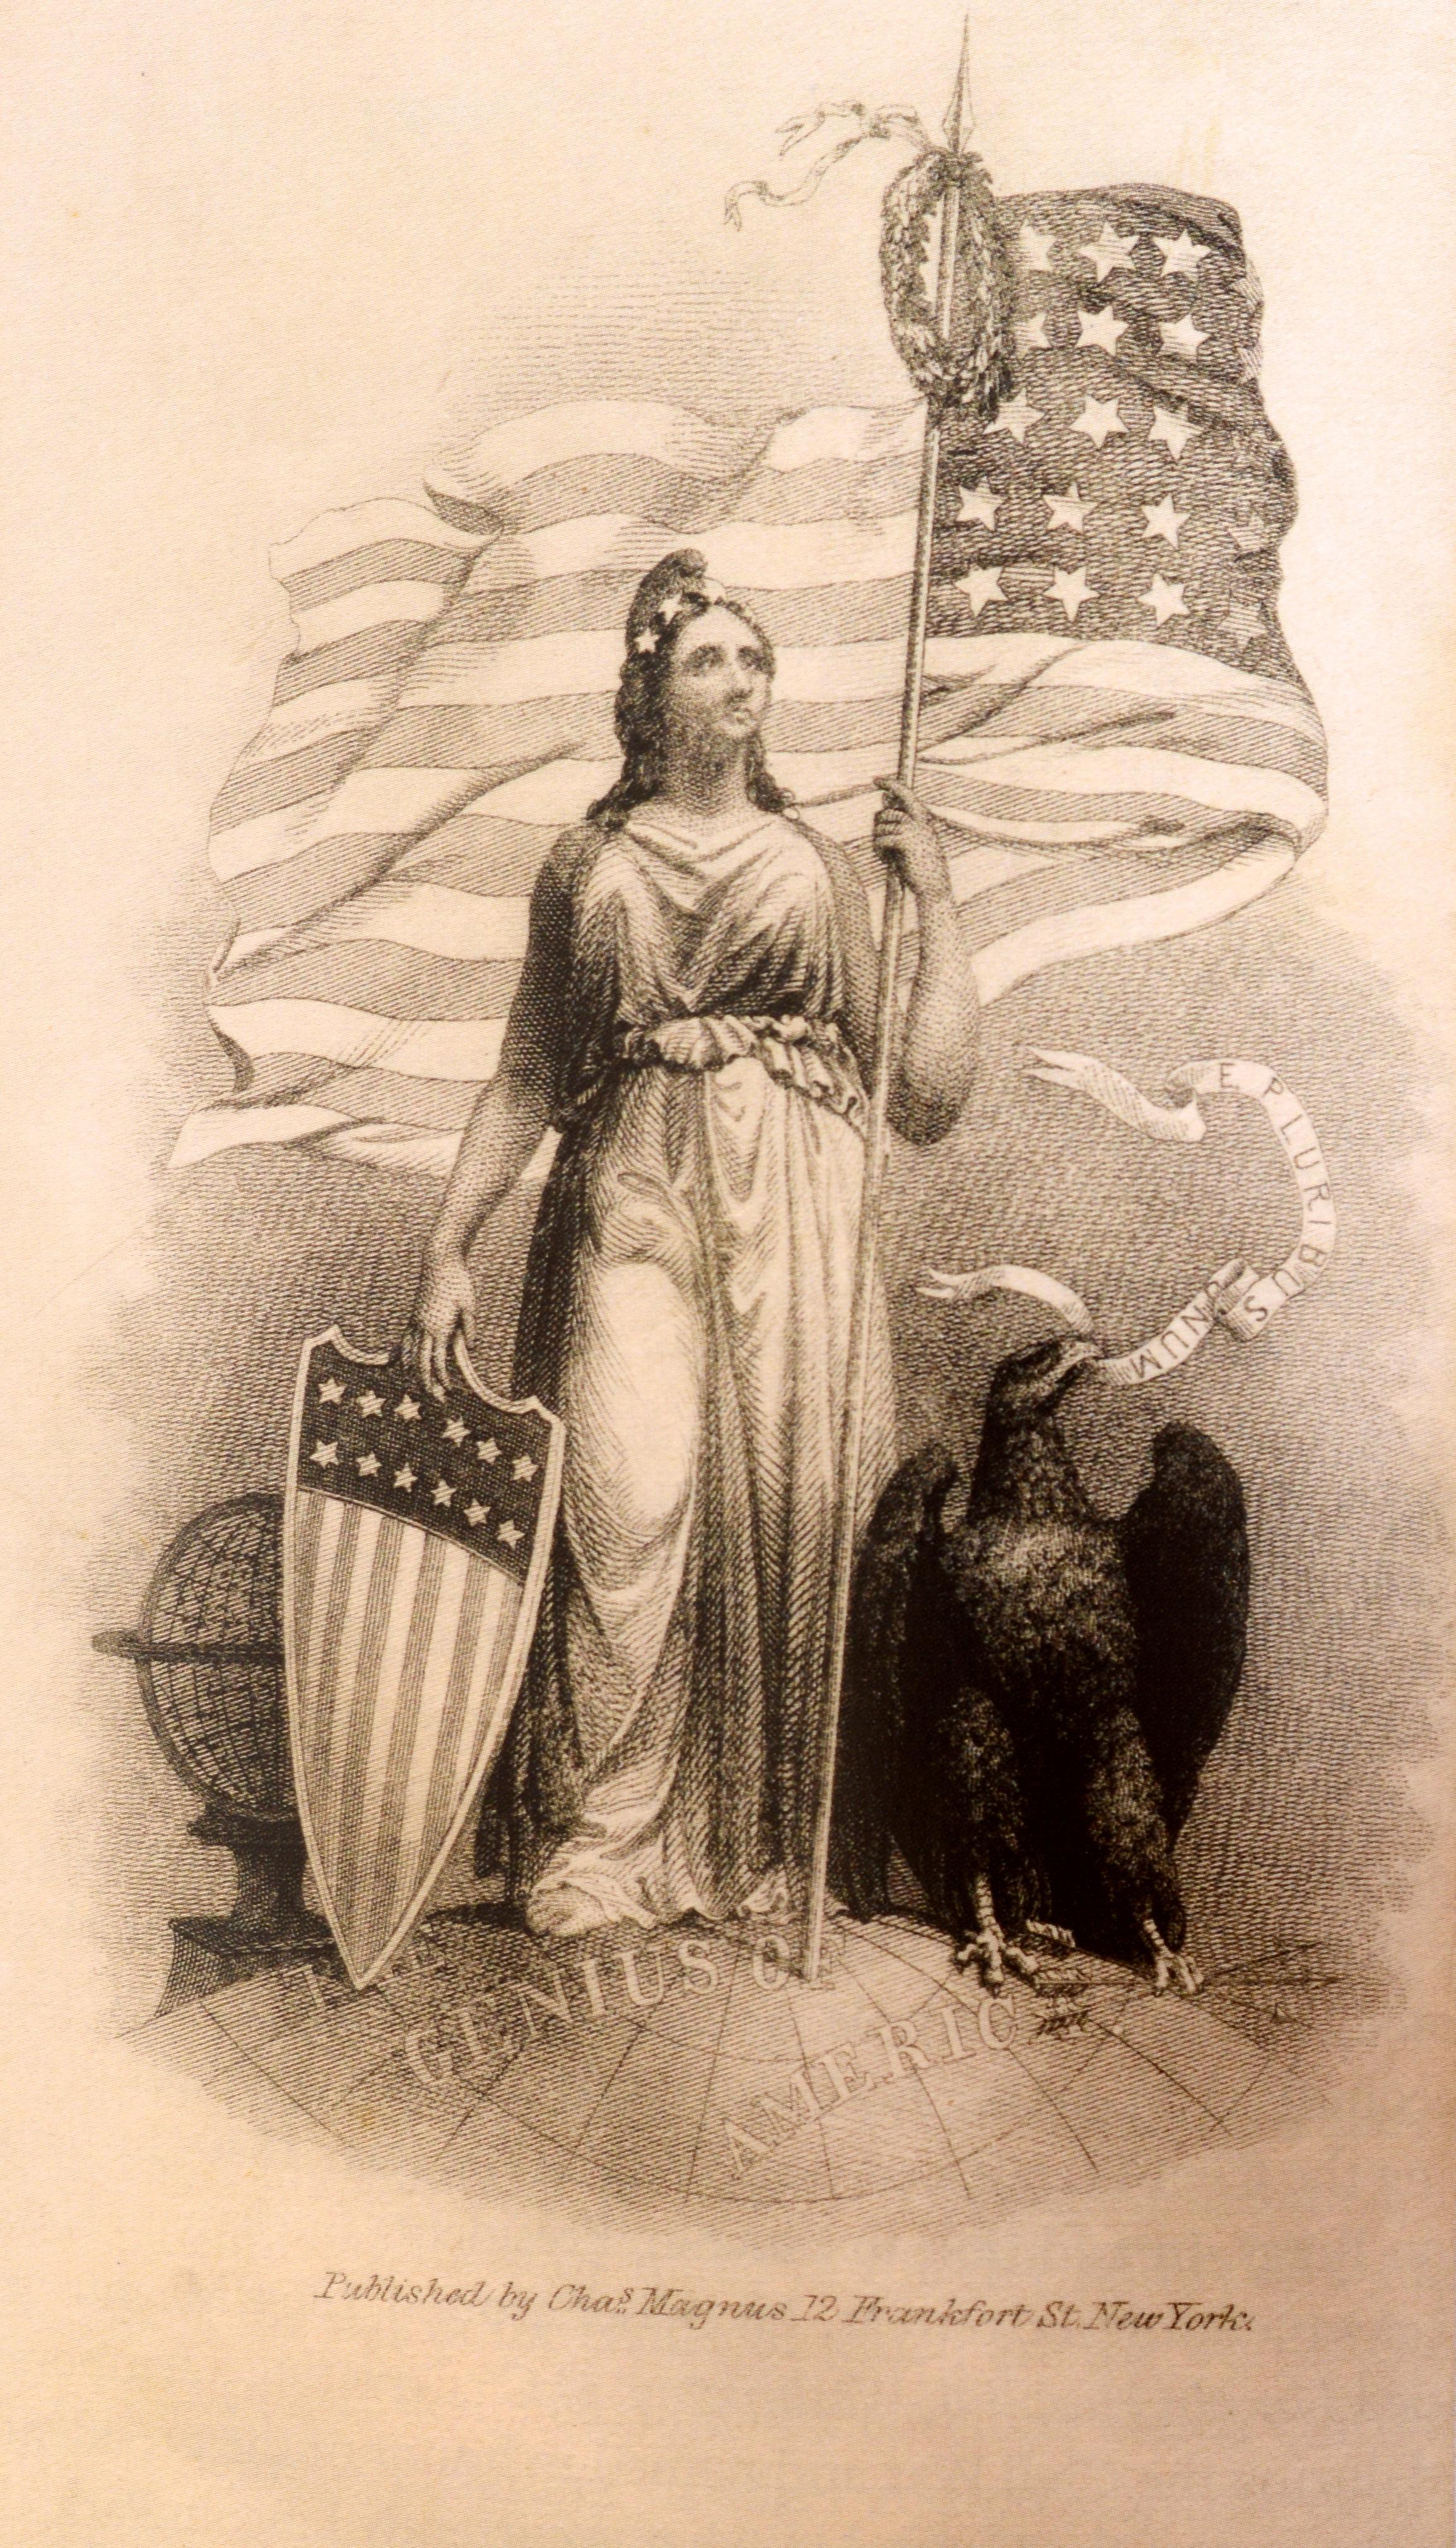 Charles Magnus, Lithograf, Illustrating America's Past, 1850-1900, 1. Auflage im Angebot 6